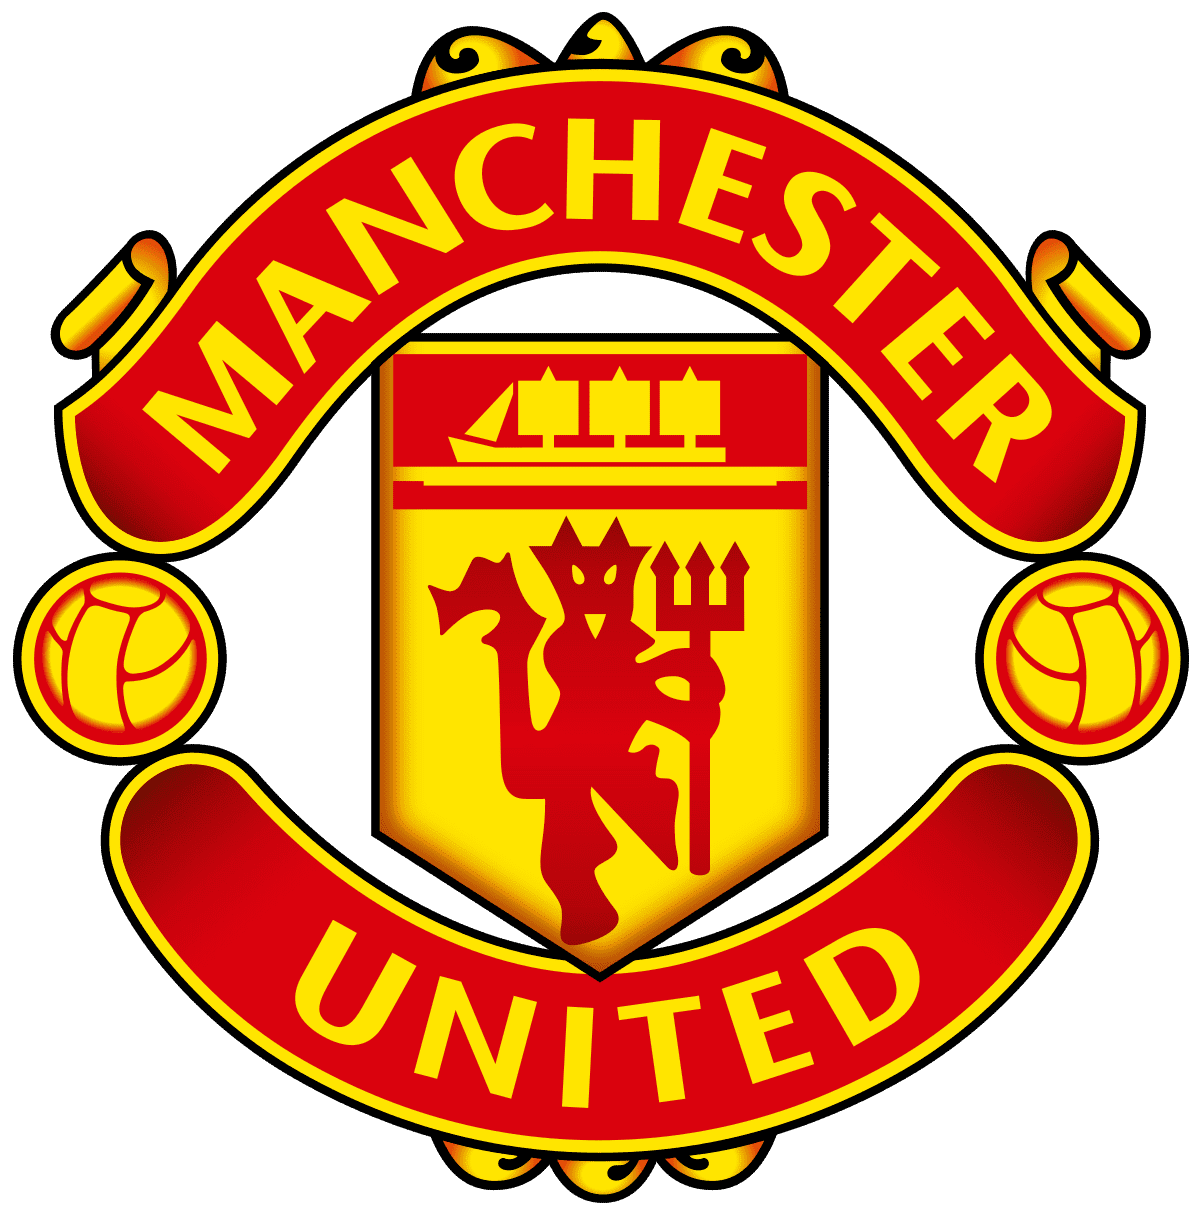 Manchester United Football club